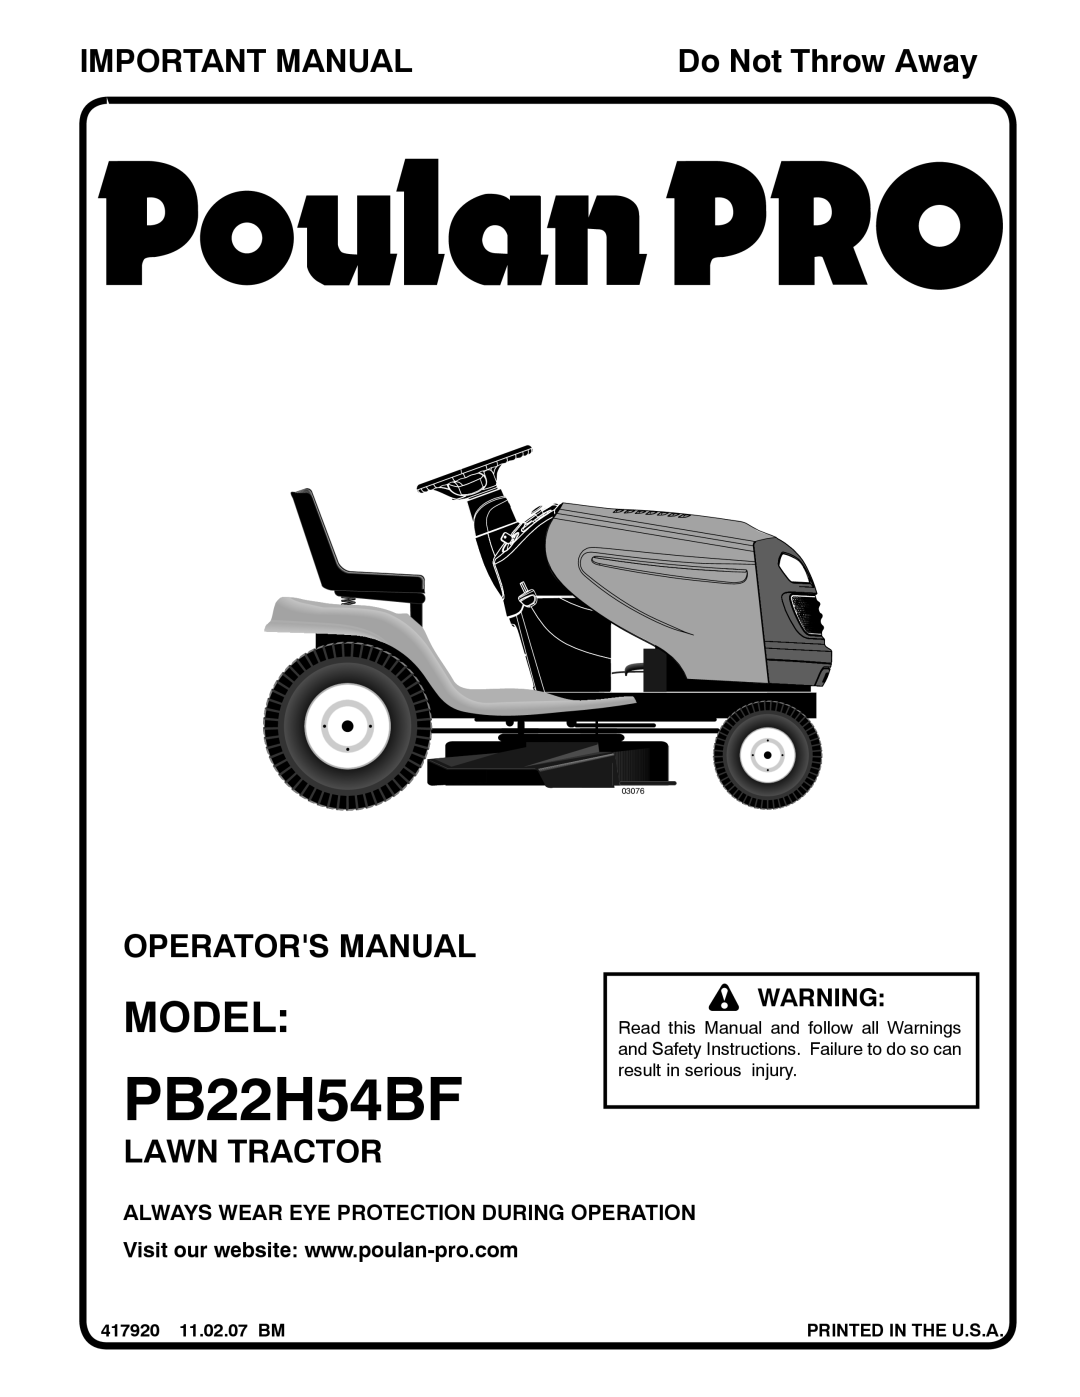 Poulan 417920 manual Model, Important Manual, Operators Manual, Lawn Tractor, Do Not Throw Away, PB22H54BF, 03076 